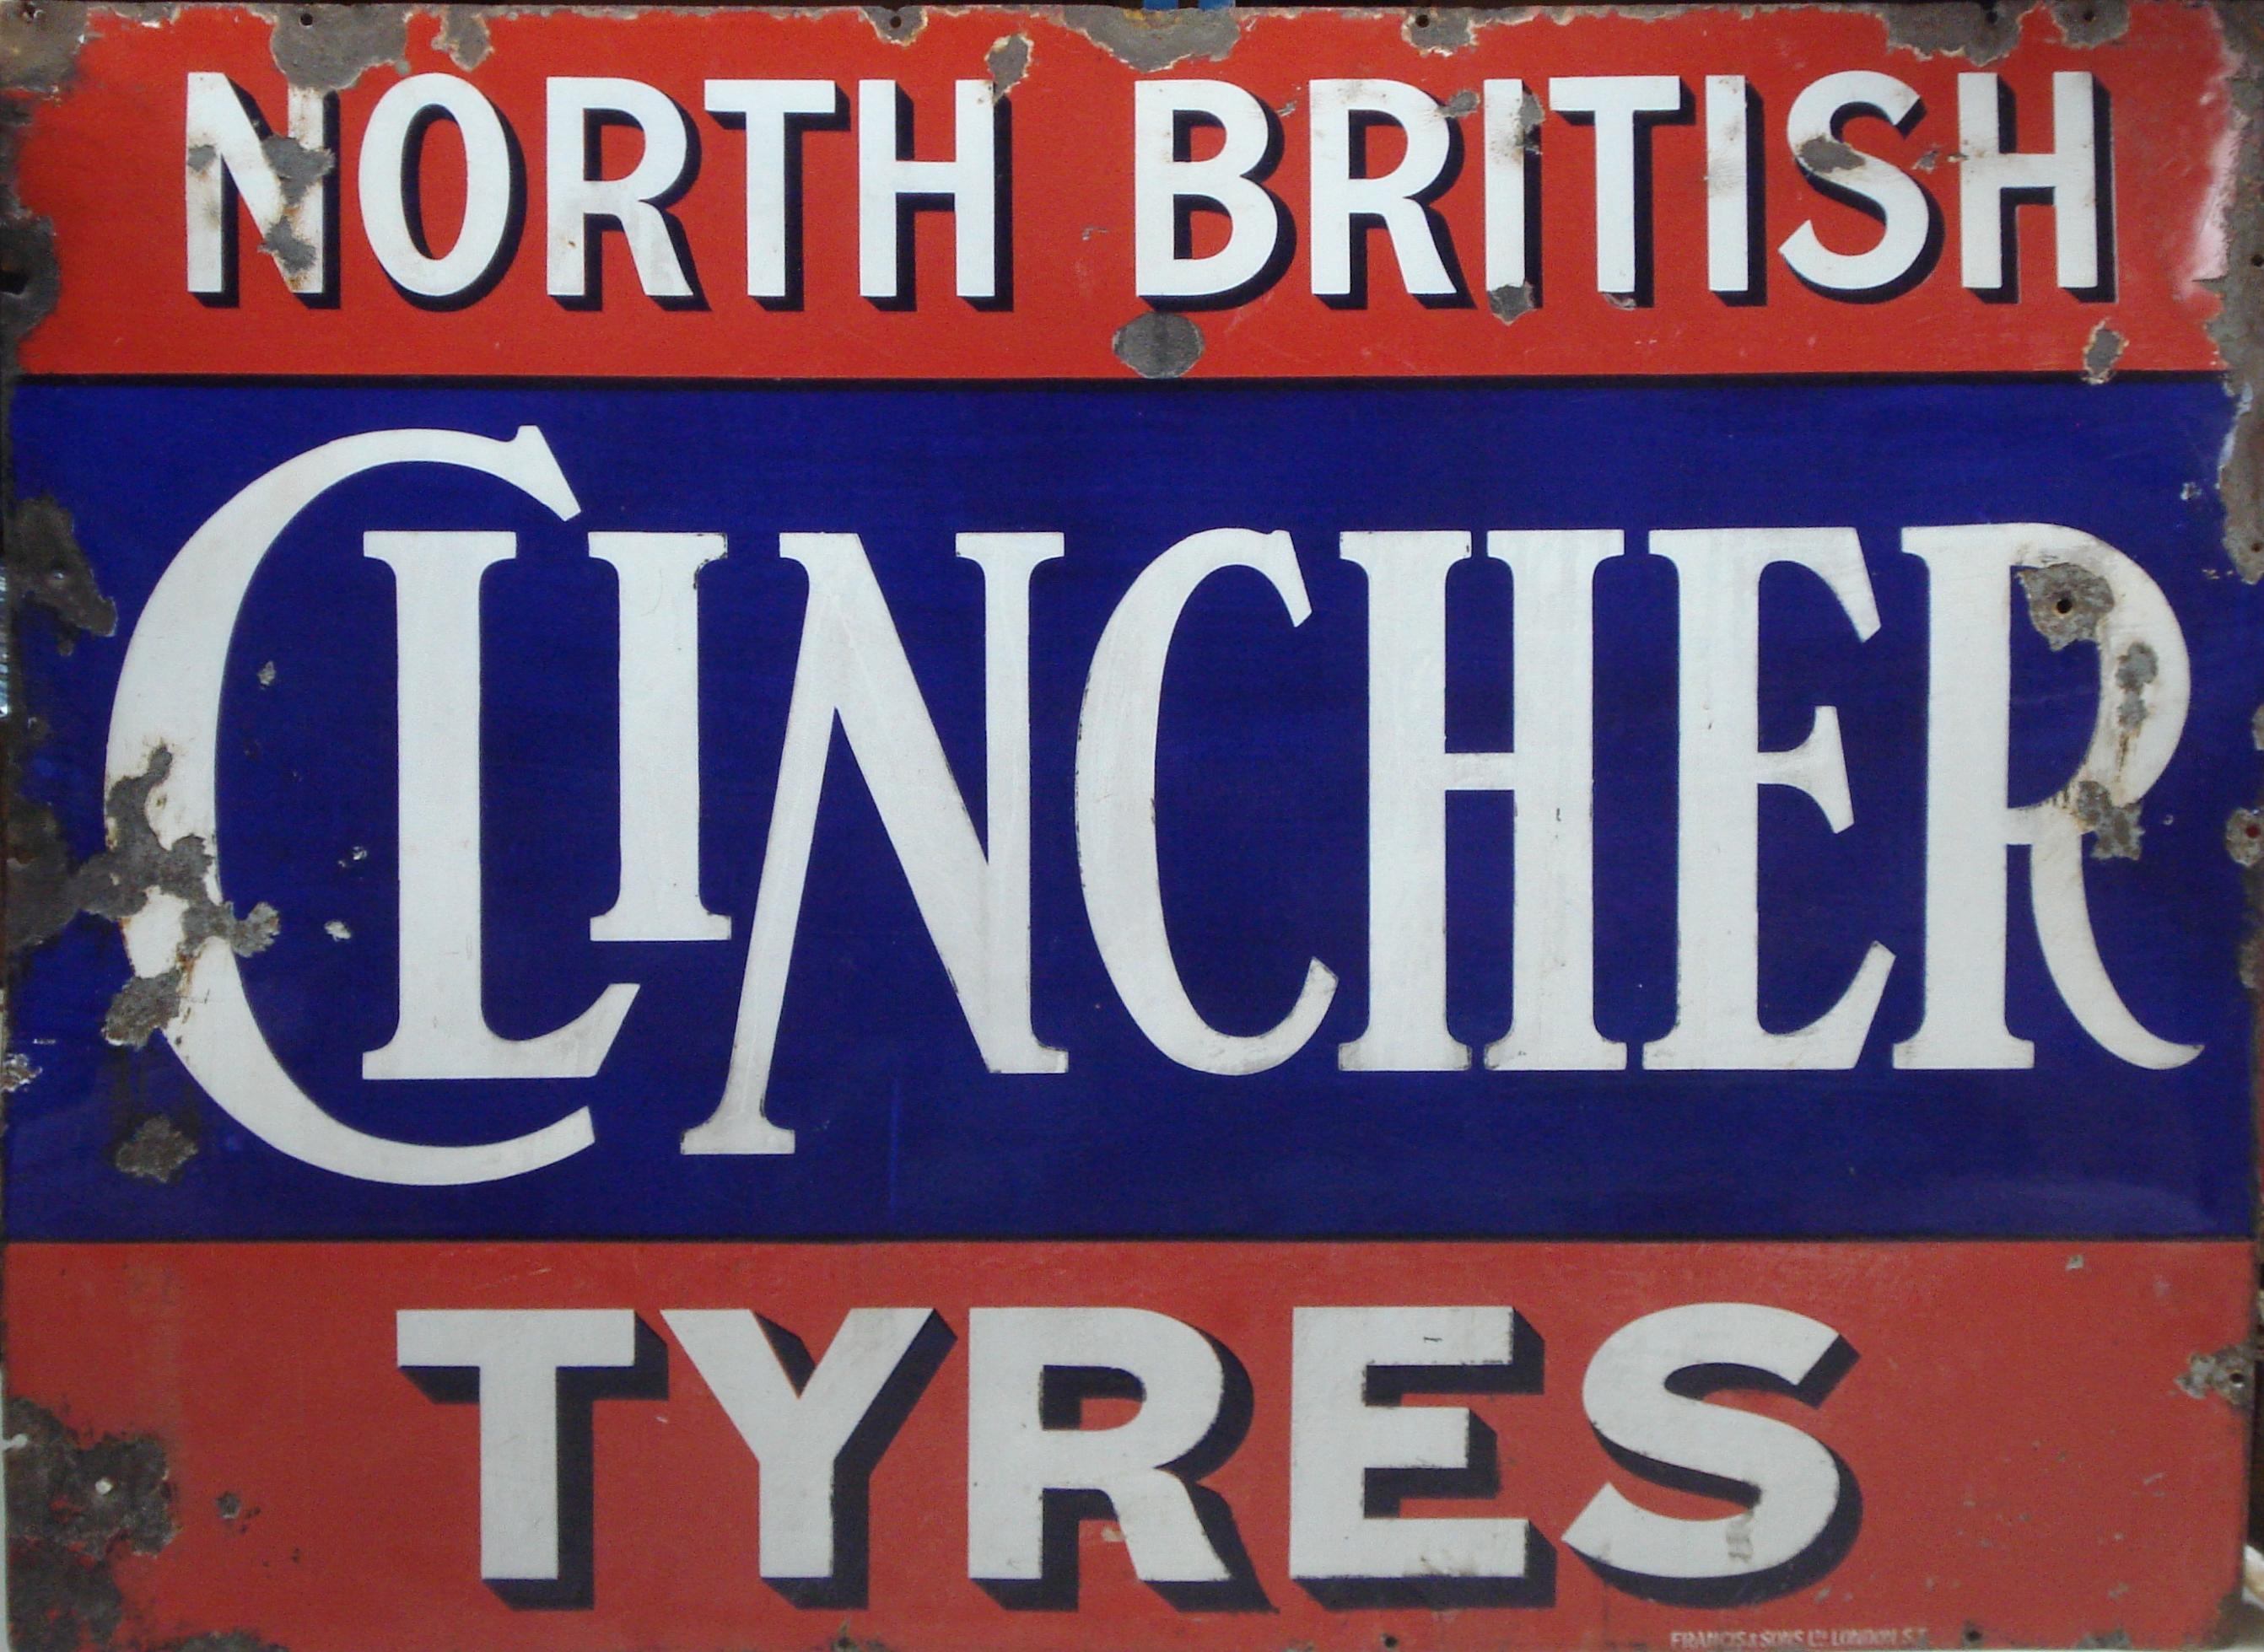 Bonhams Cars : A 'North British Clincher Tyres' enamel sign,